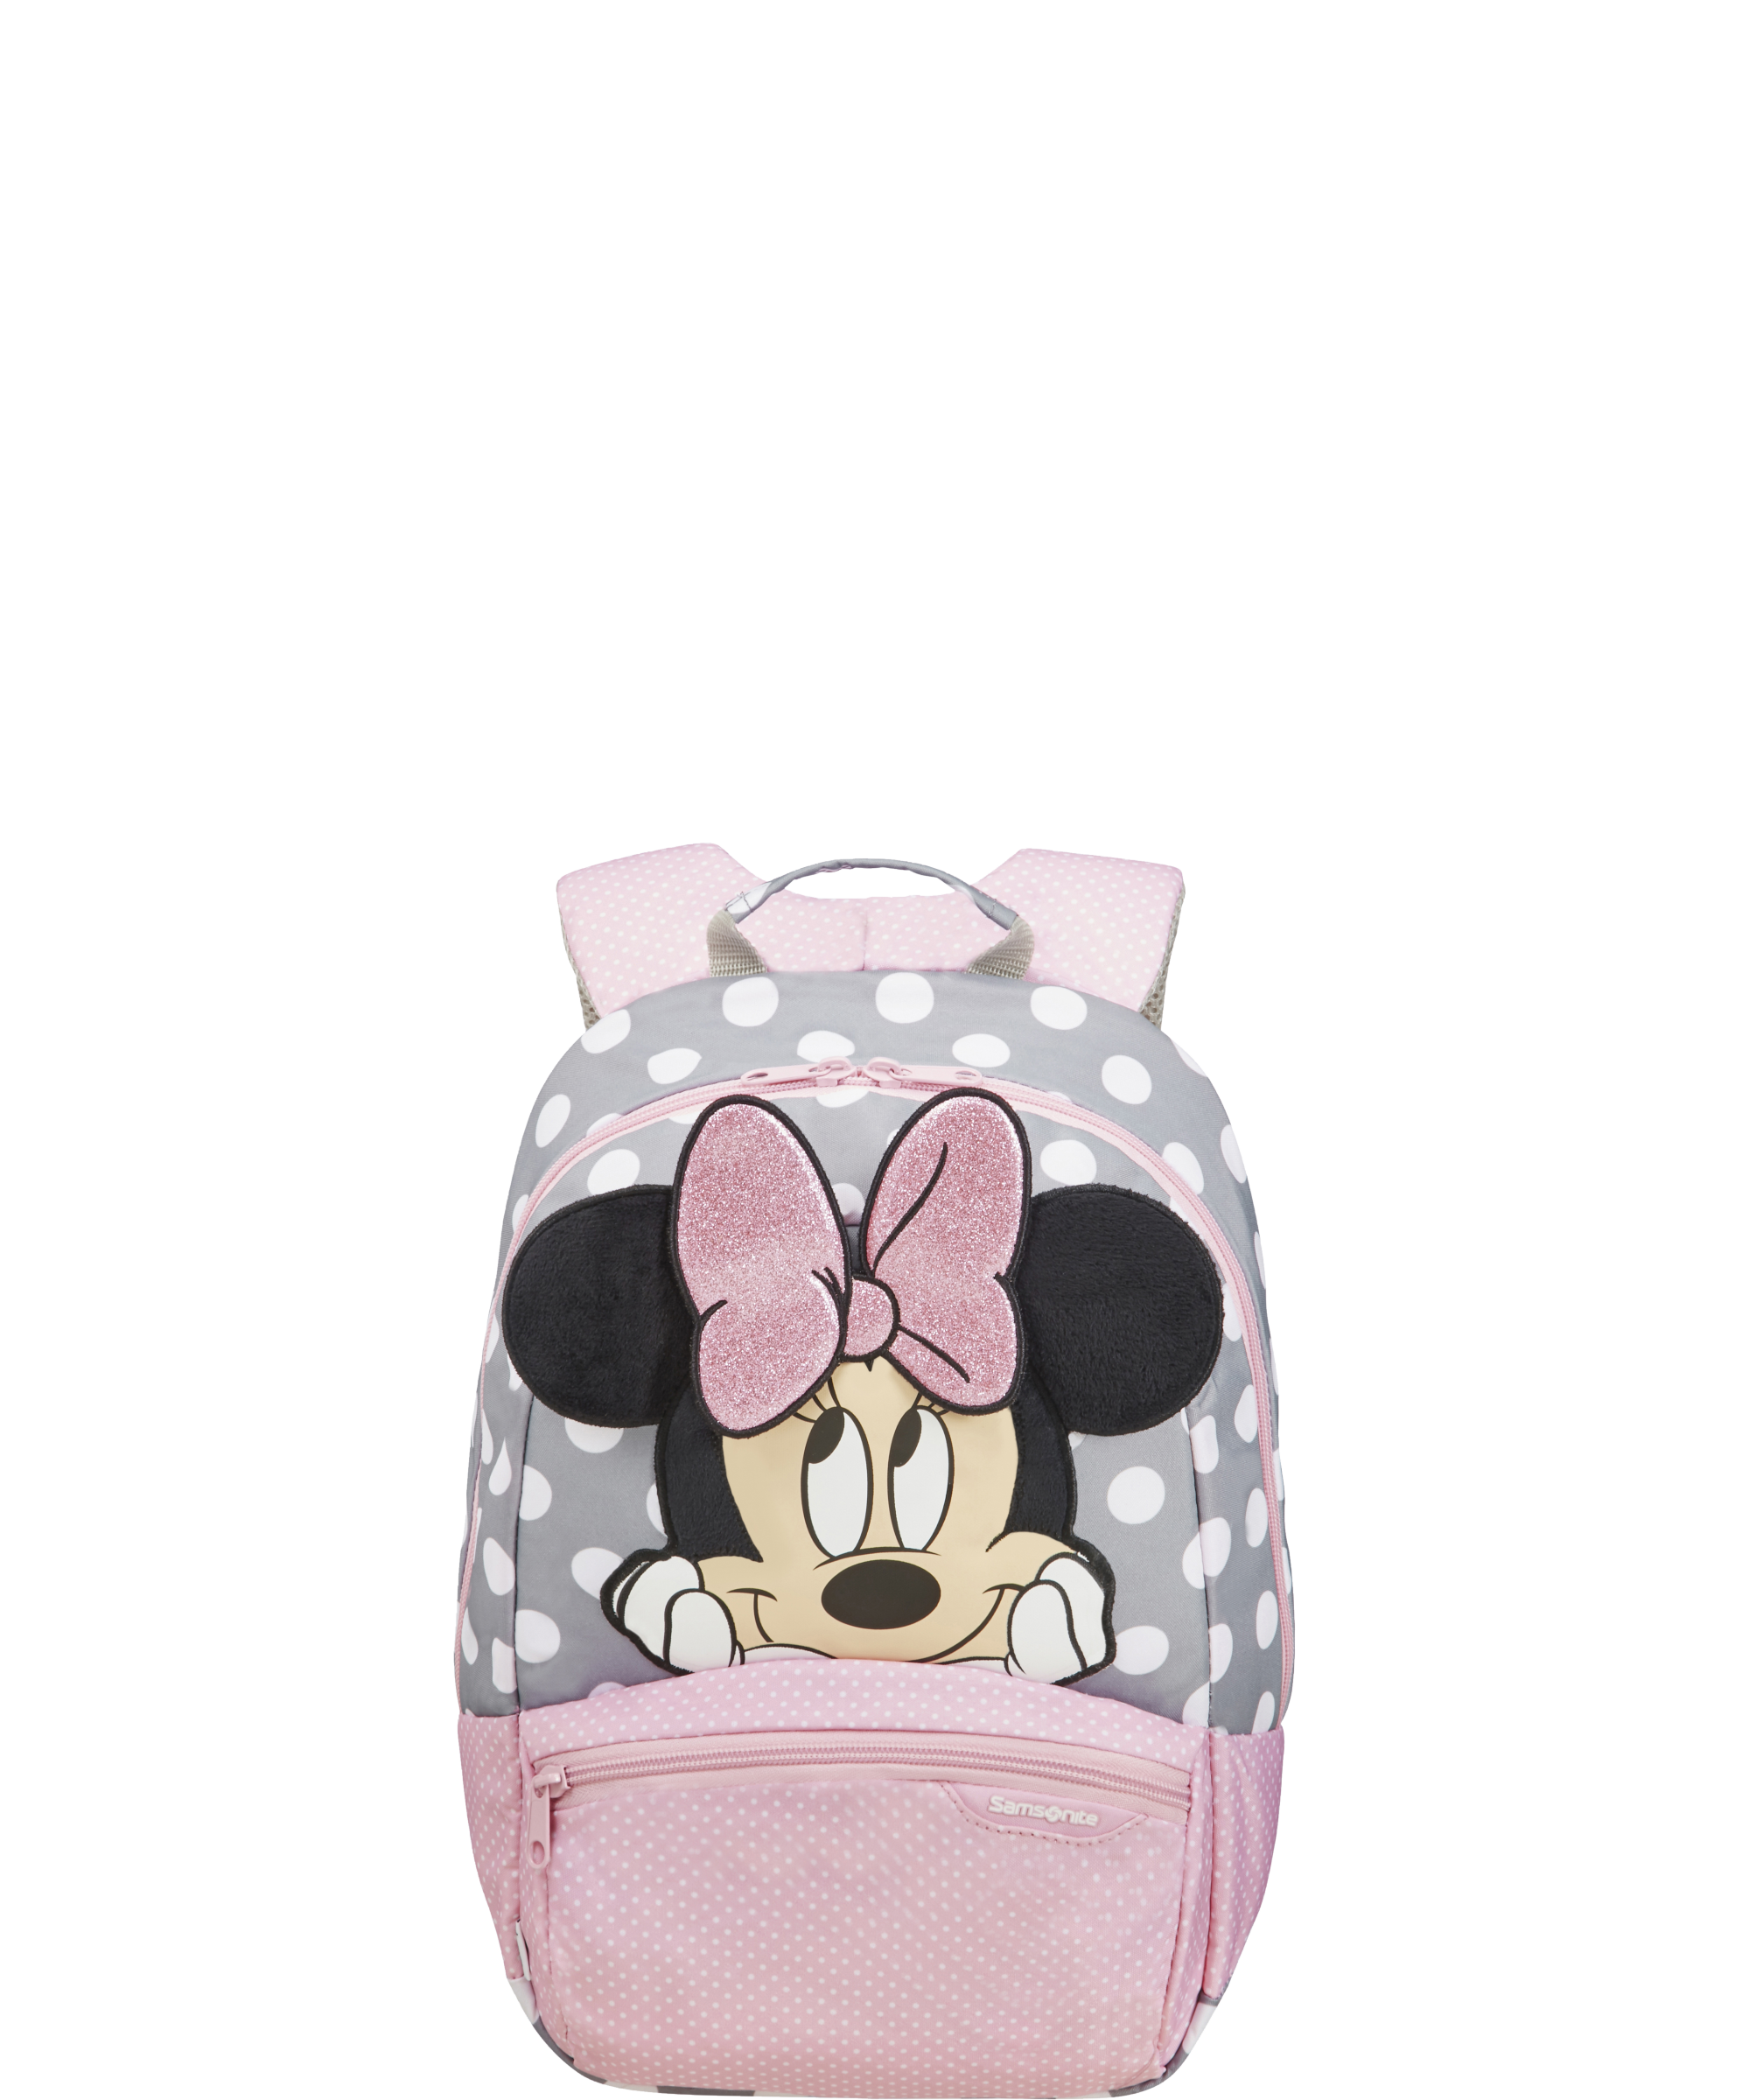 xmas *BNWT*Samsonite Minnie Mouse Toiletry Bag Disney girls luggage RRP £19.99 